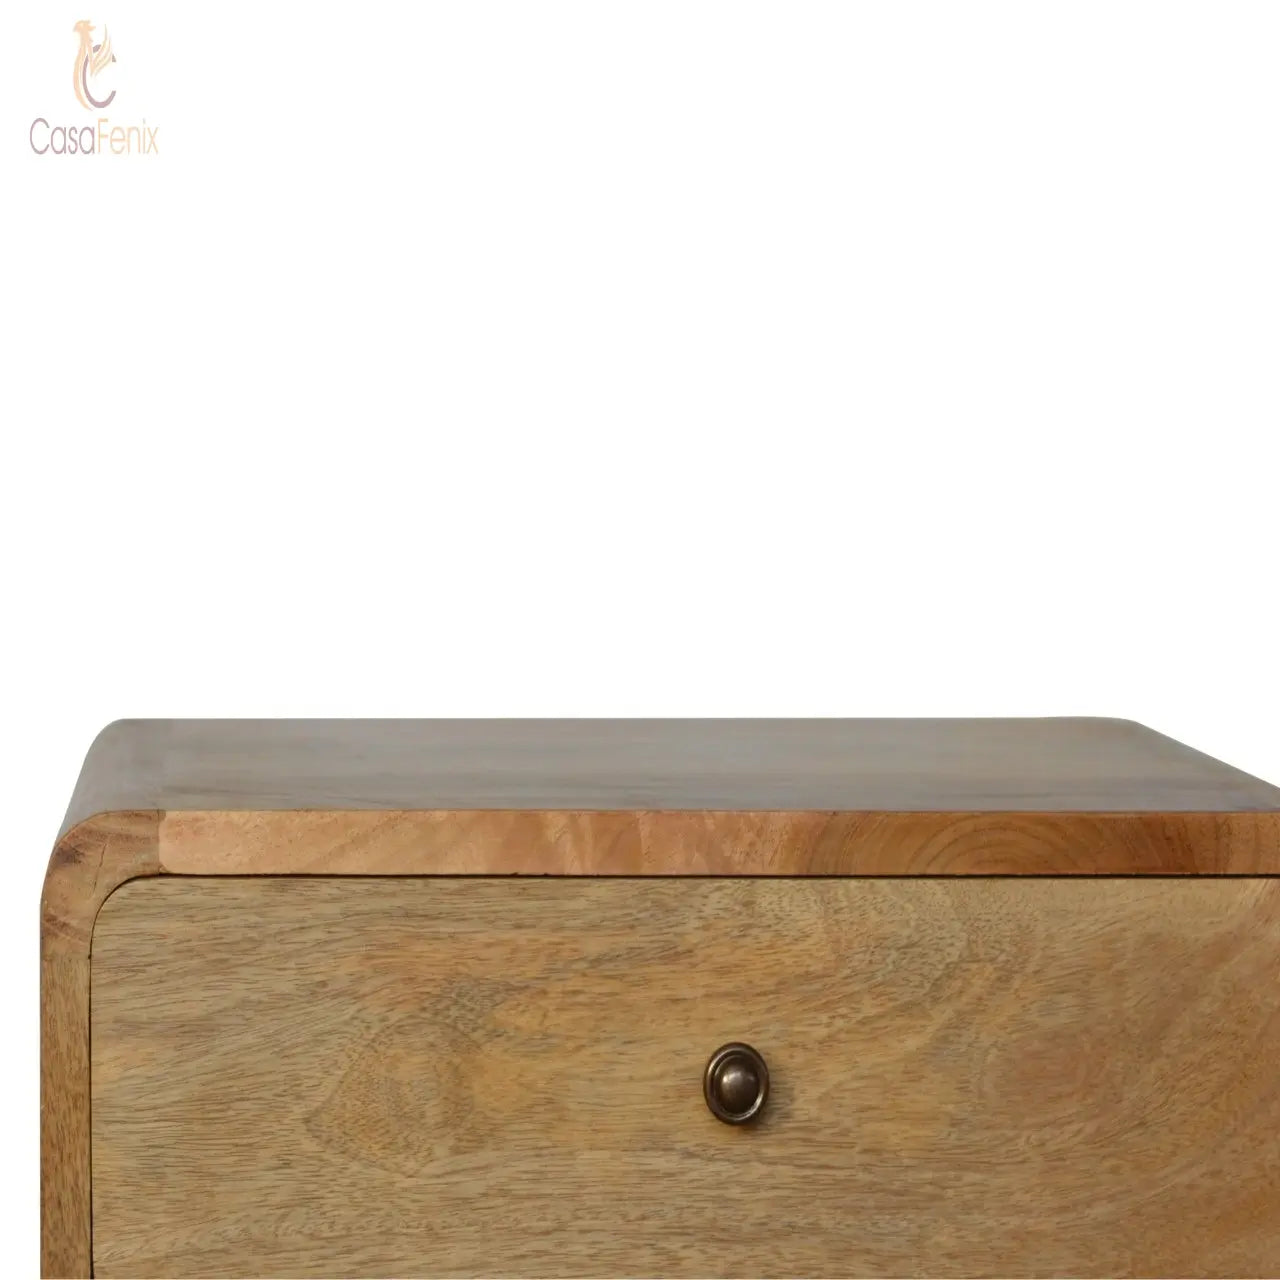 Curved Oak-ish Bedside Table 2 drawer Chest - CasaFenix